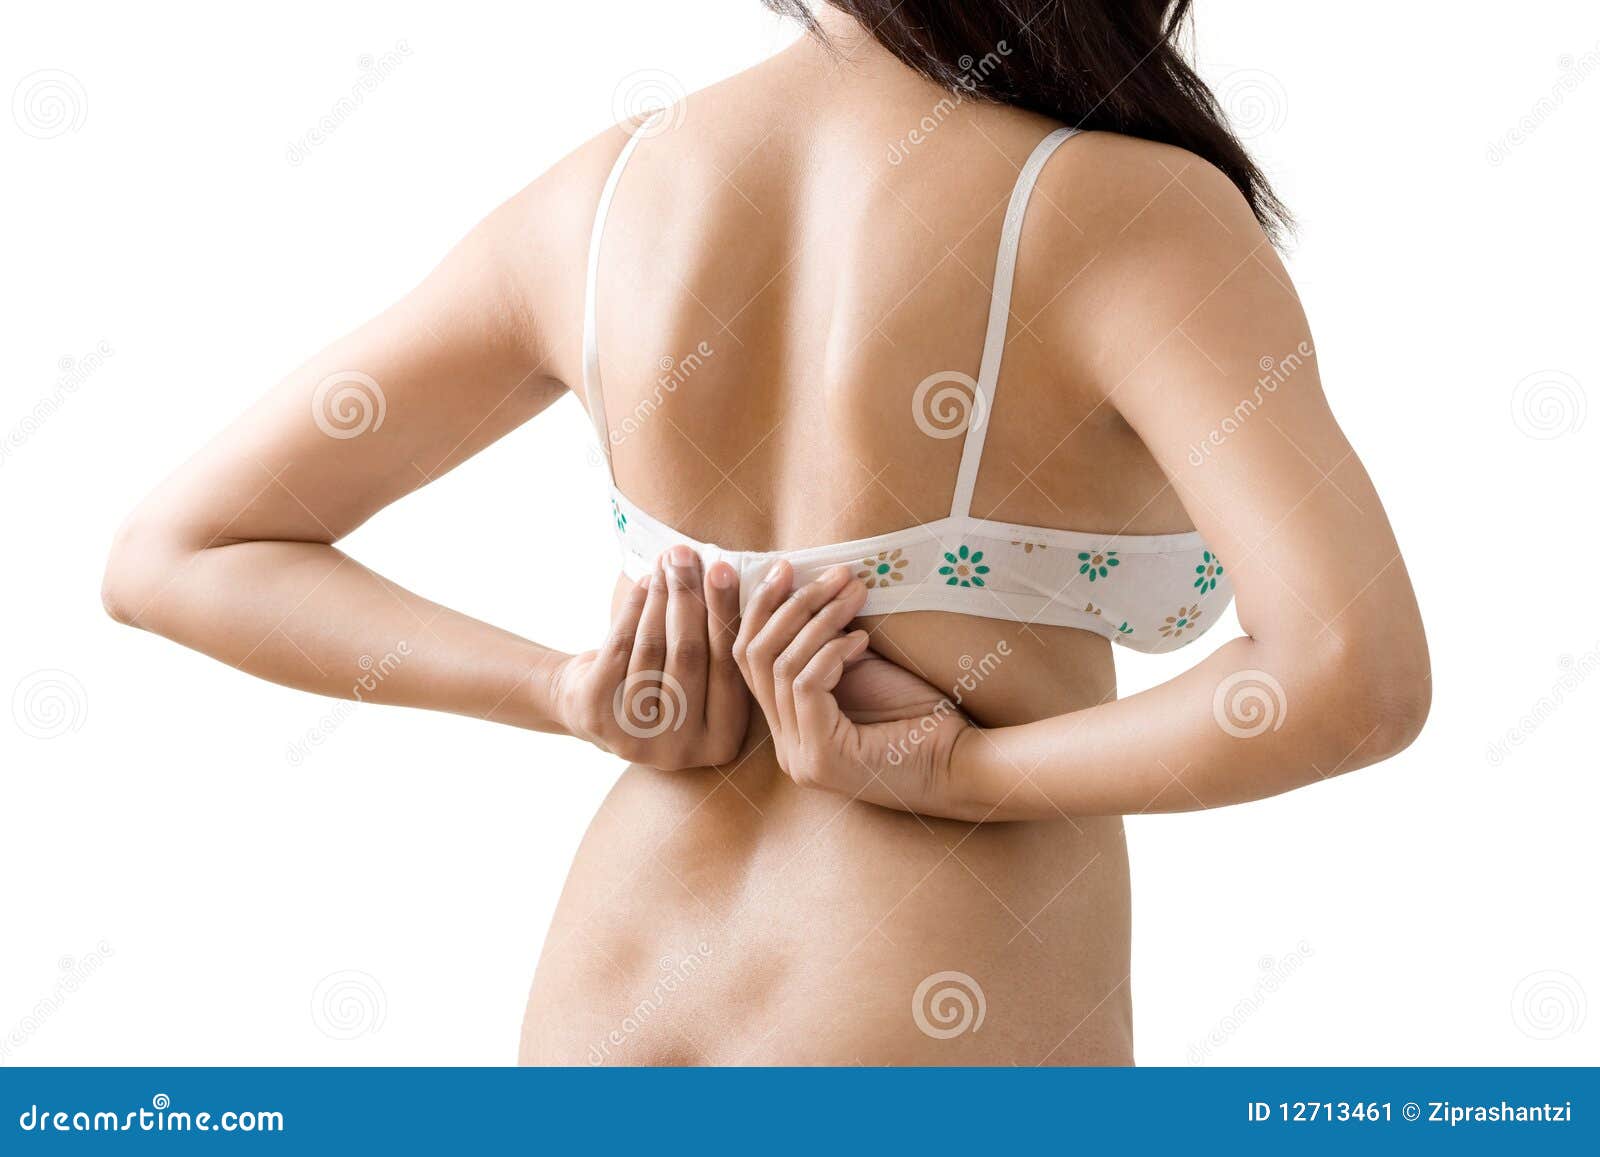 A Girl Dressing or Undressing White Bra Stock Image - Image of body,  hispanic: 12713461